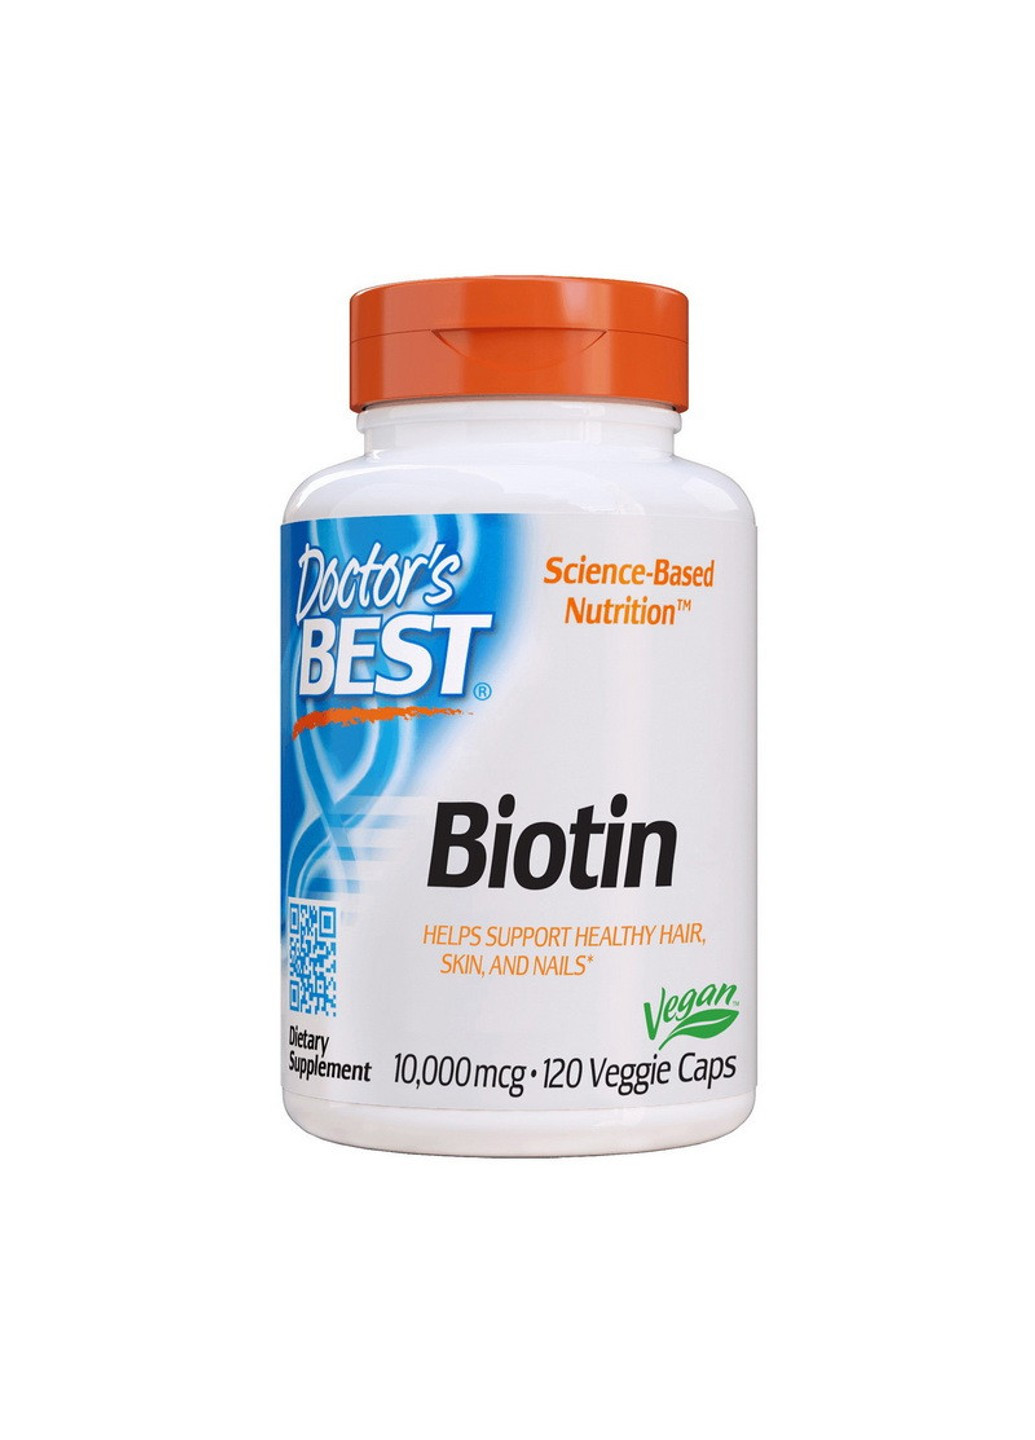 Биотин Biotin 10,000 mcg (120 капс) витамин Б7 доктор бест Doctor's Best (255409367)